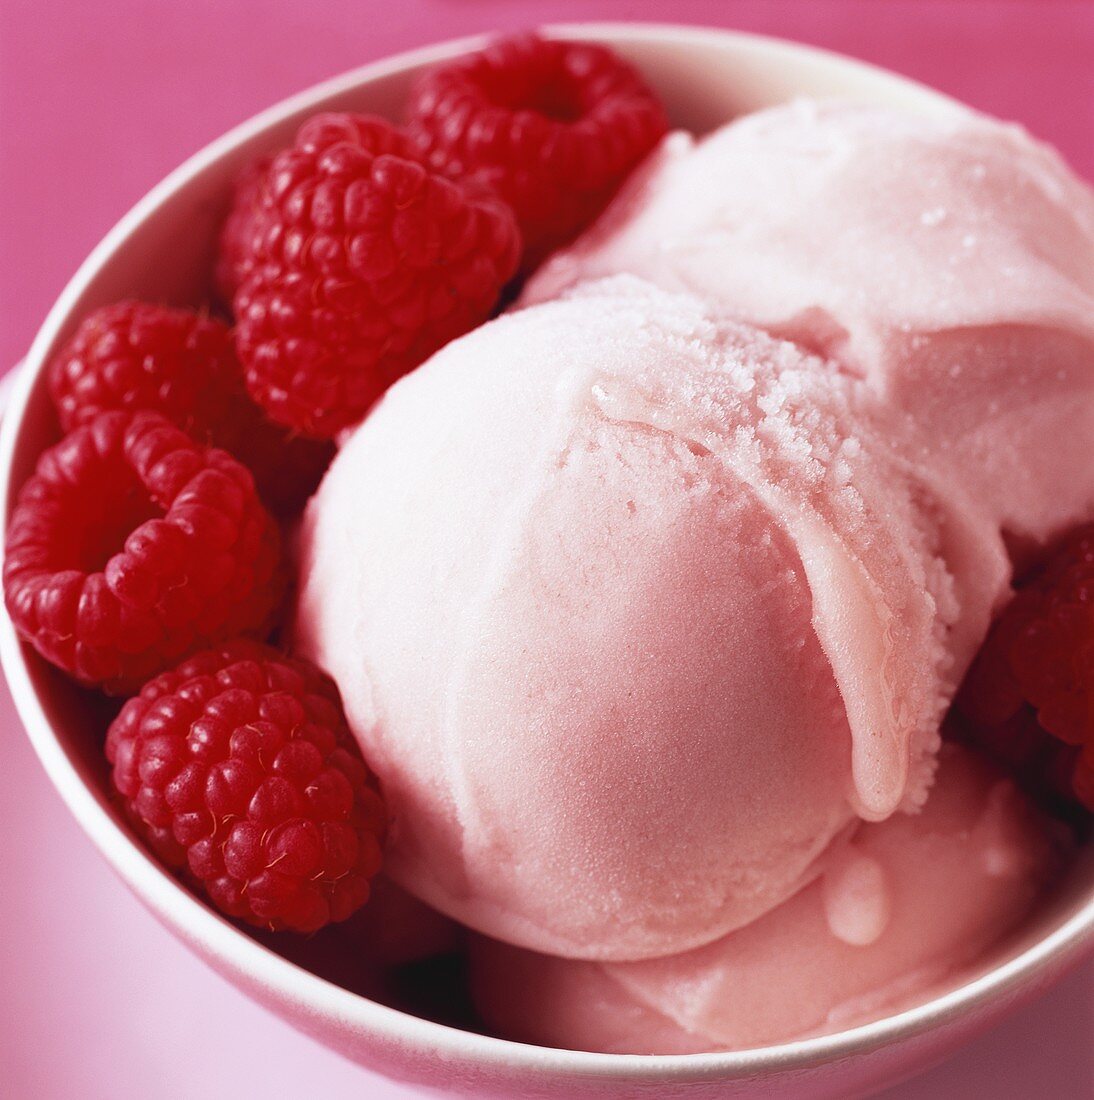 Raspberry ice cream with fresh raspberries in a bowl